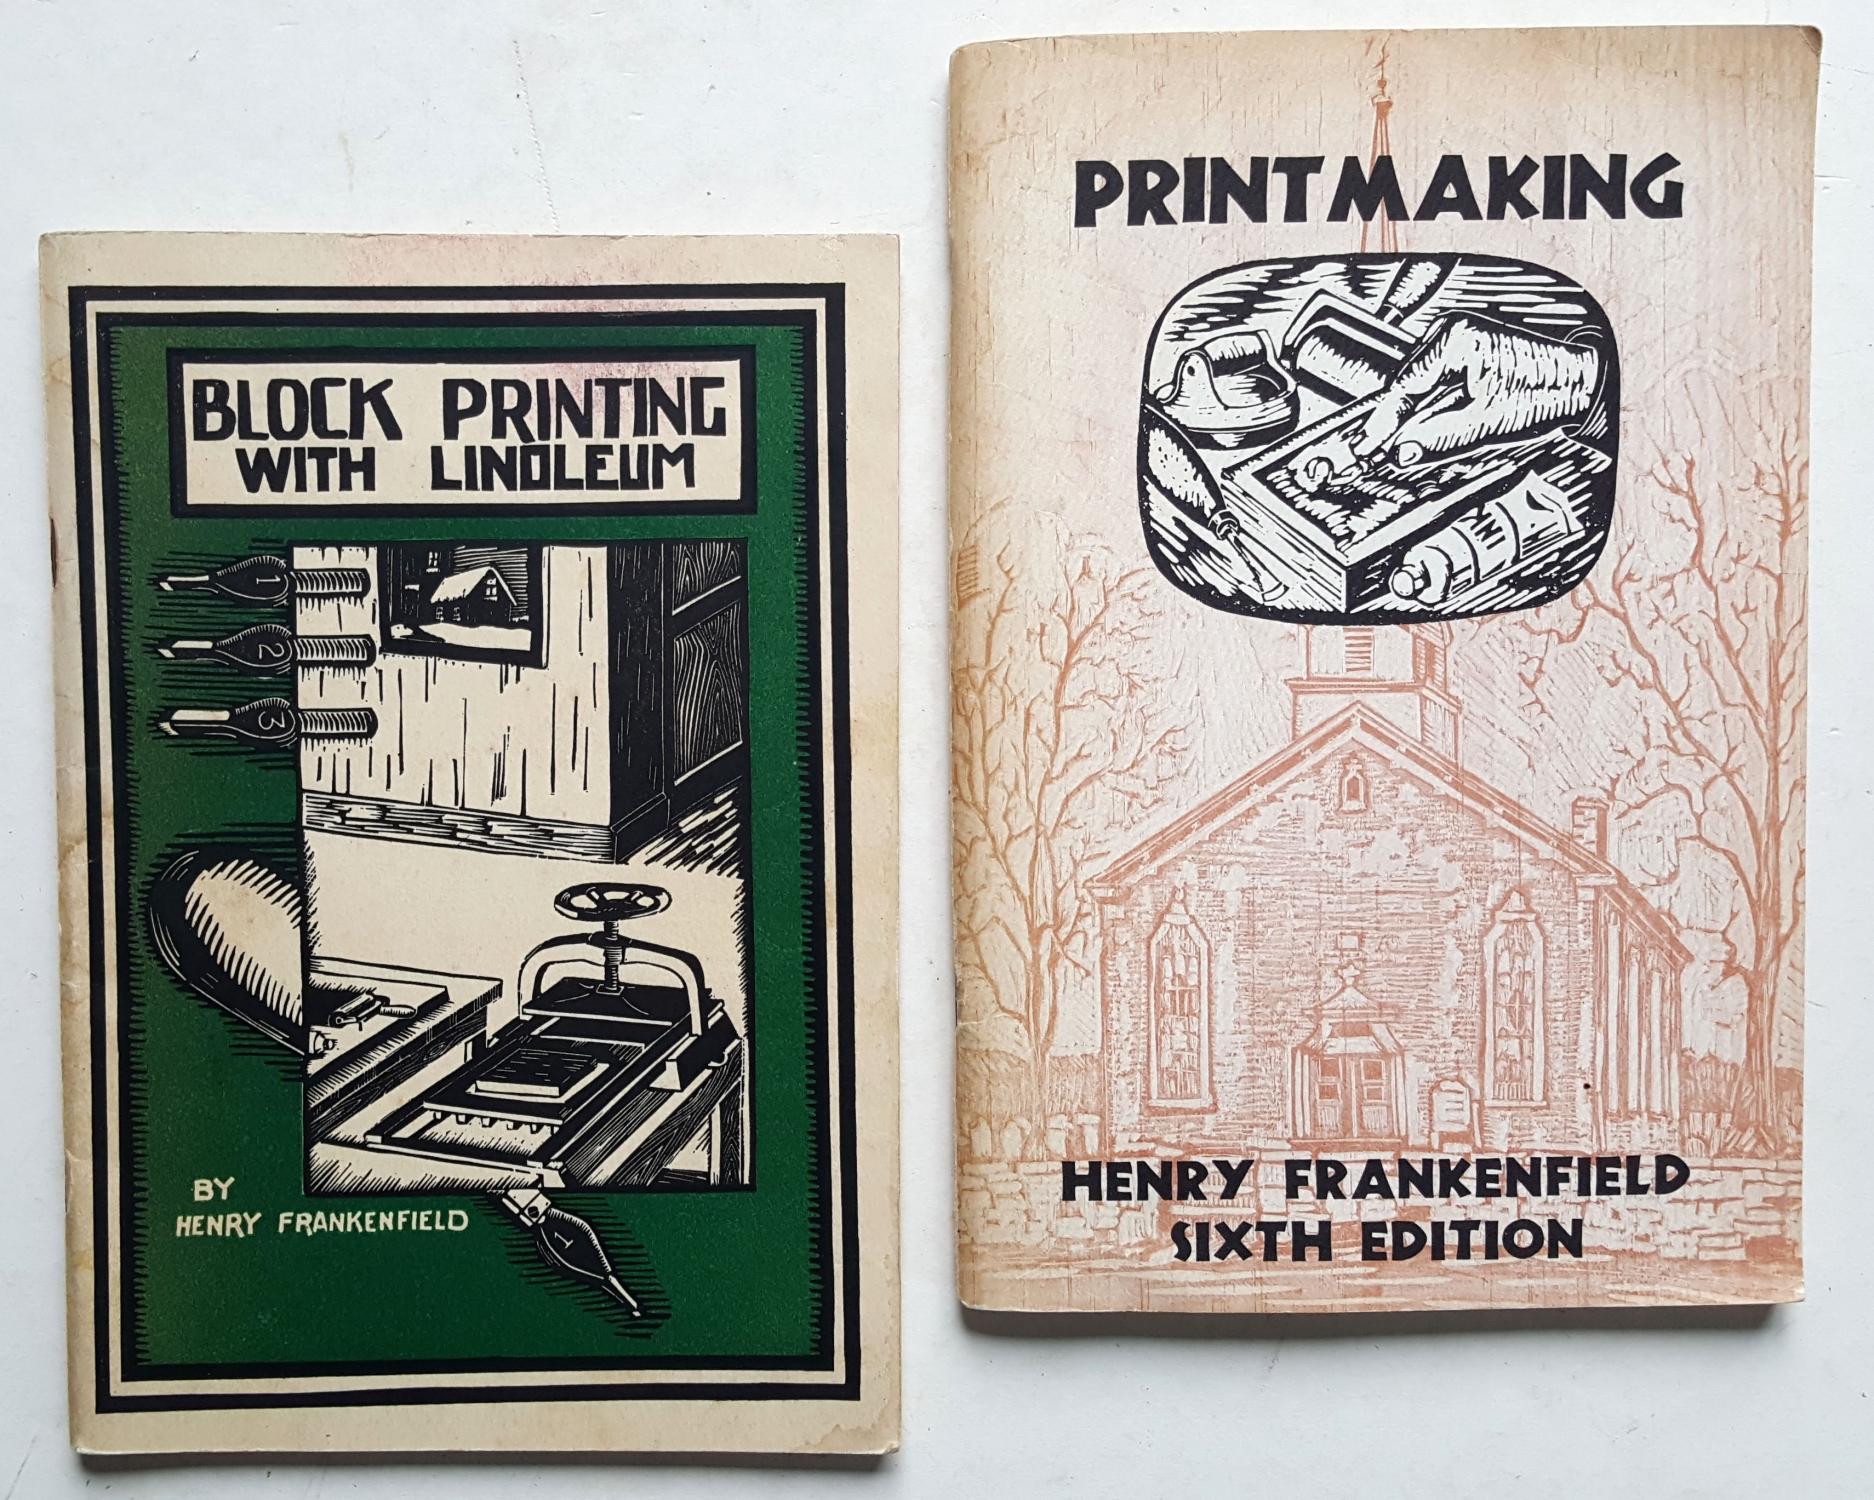 Block printing with Linoleum